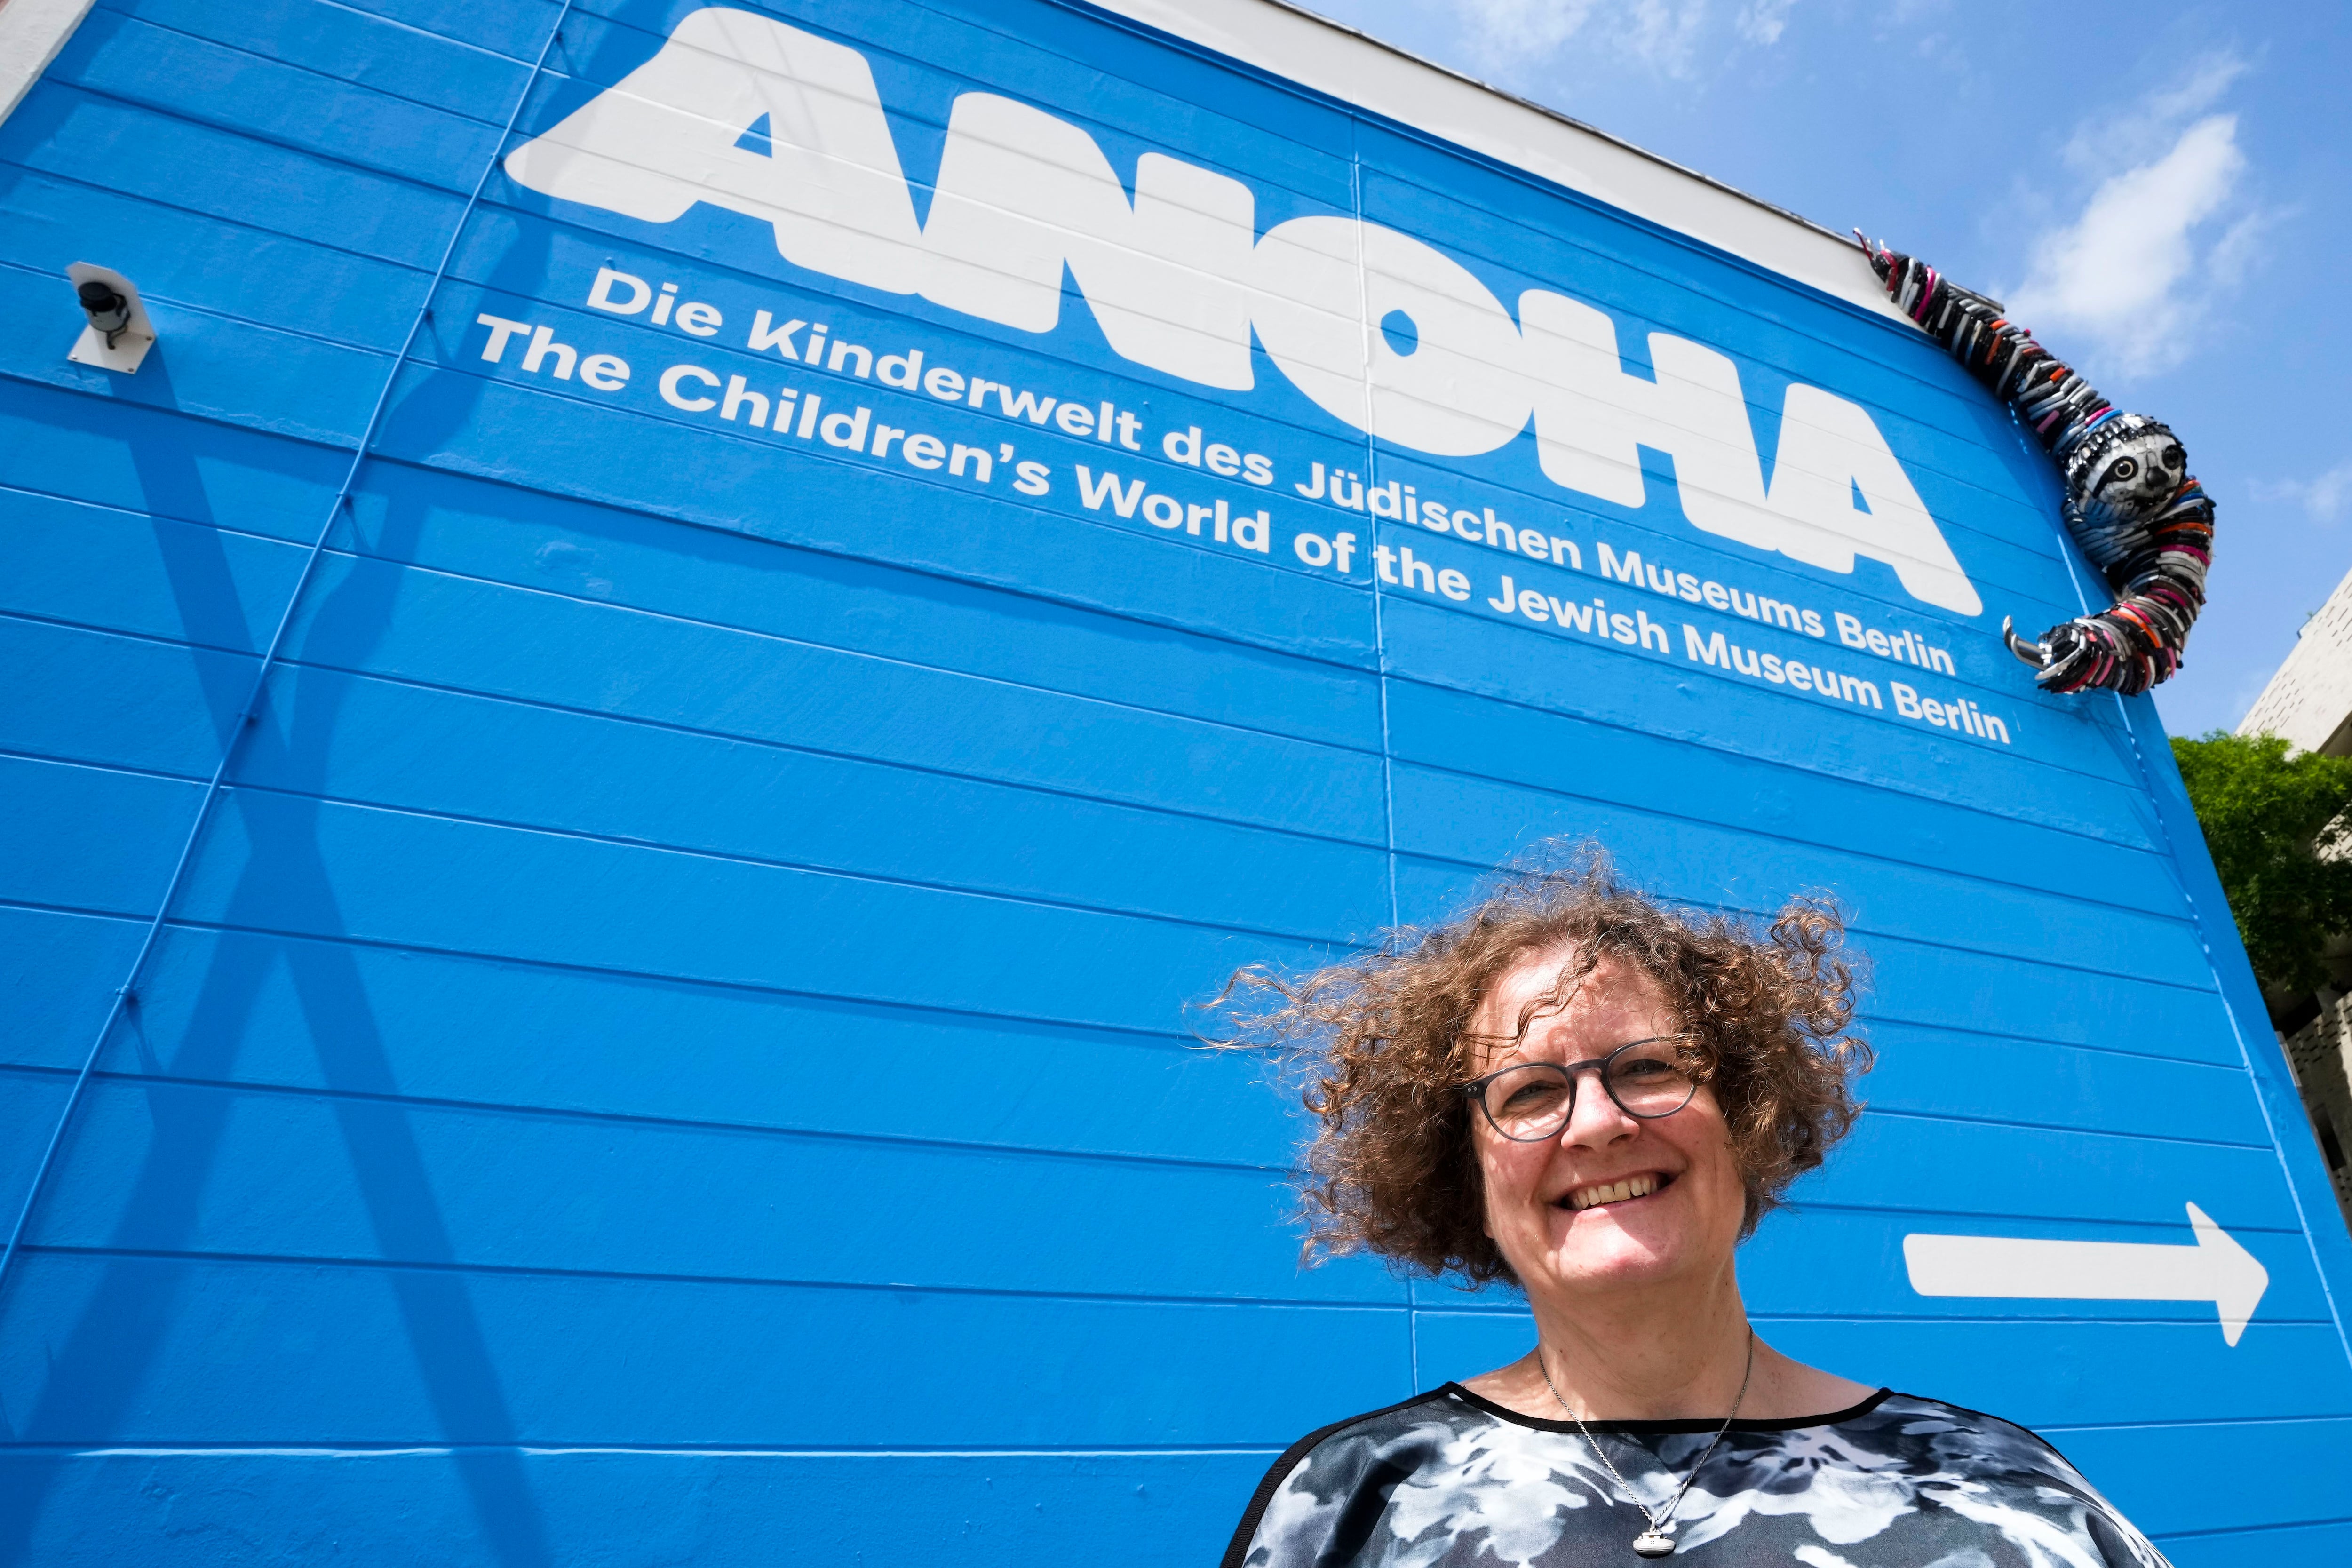 Jewish Museum in Berlin opens kids’ museum about Noah’s Ark